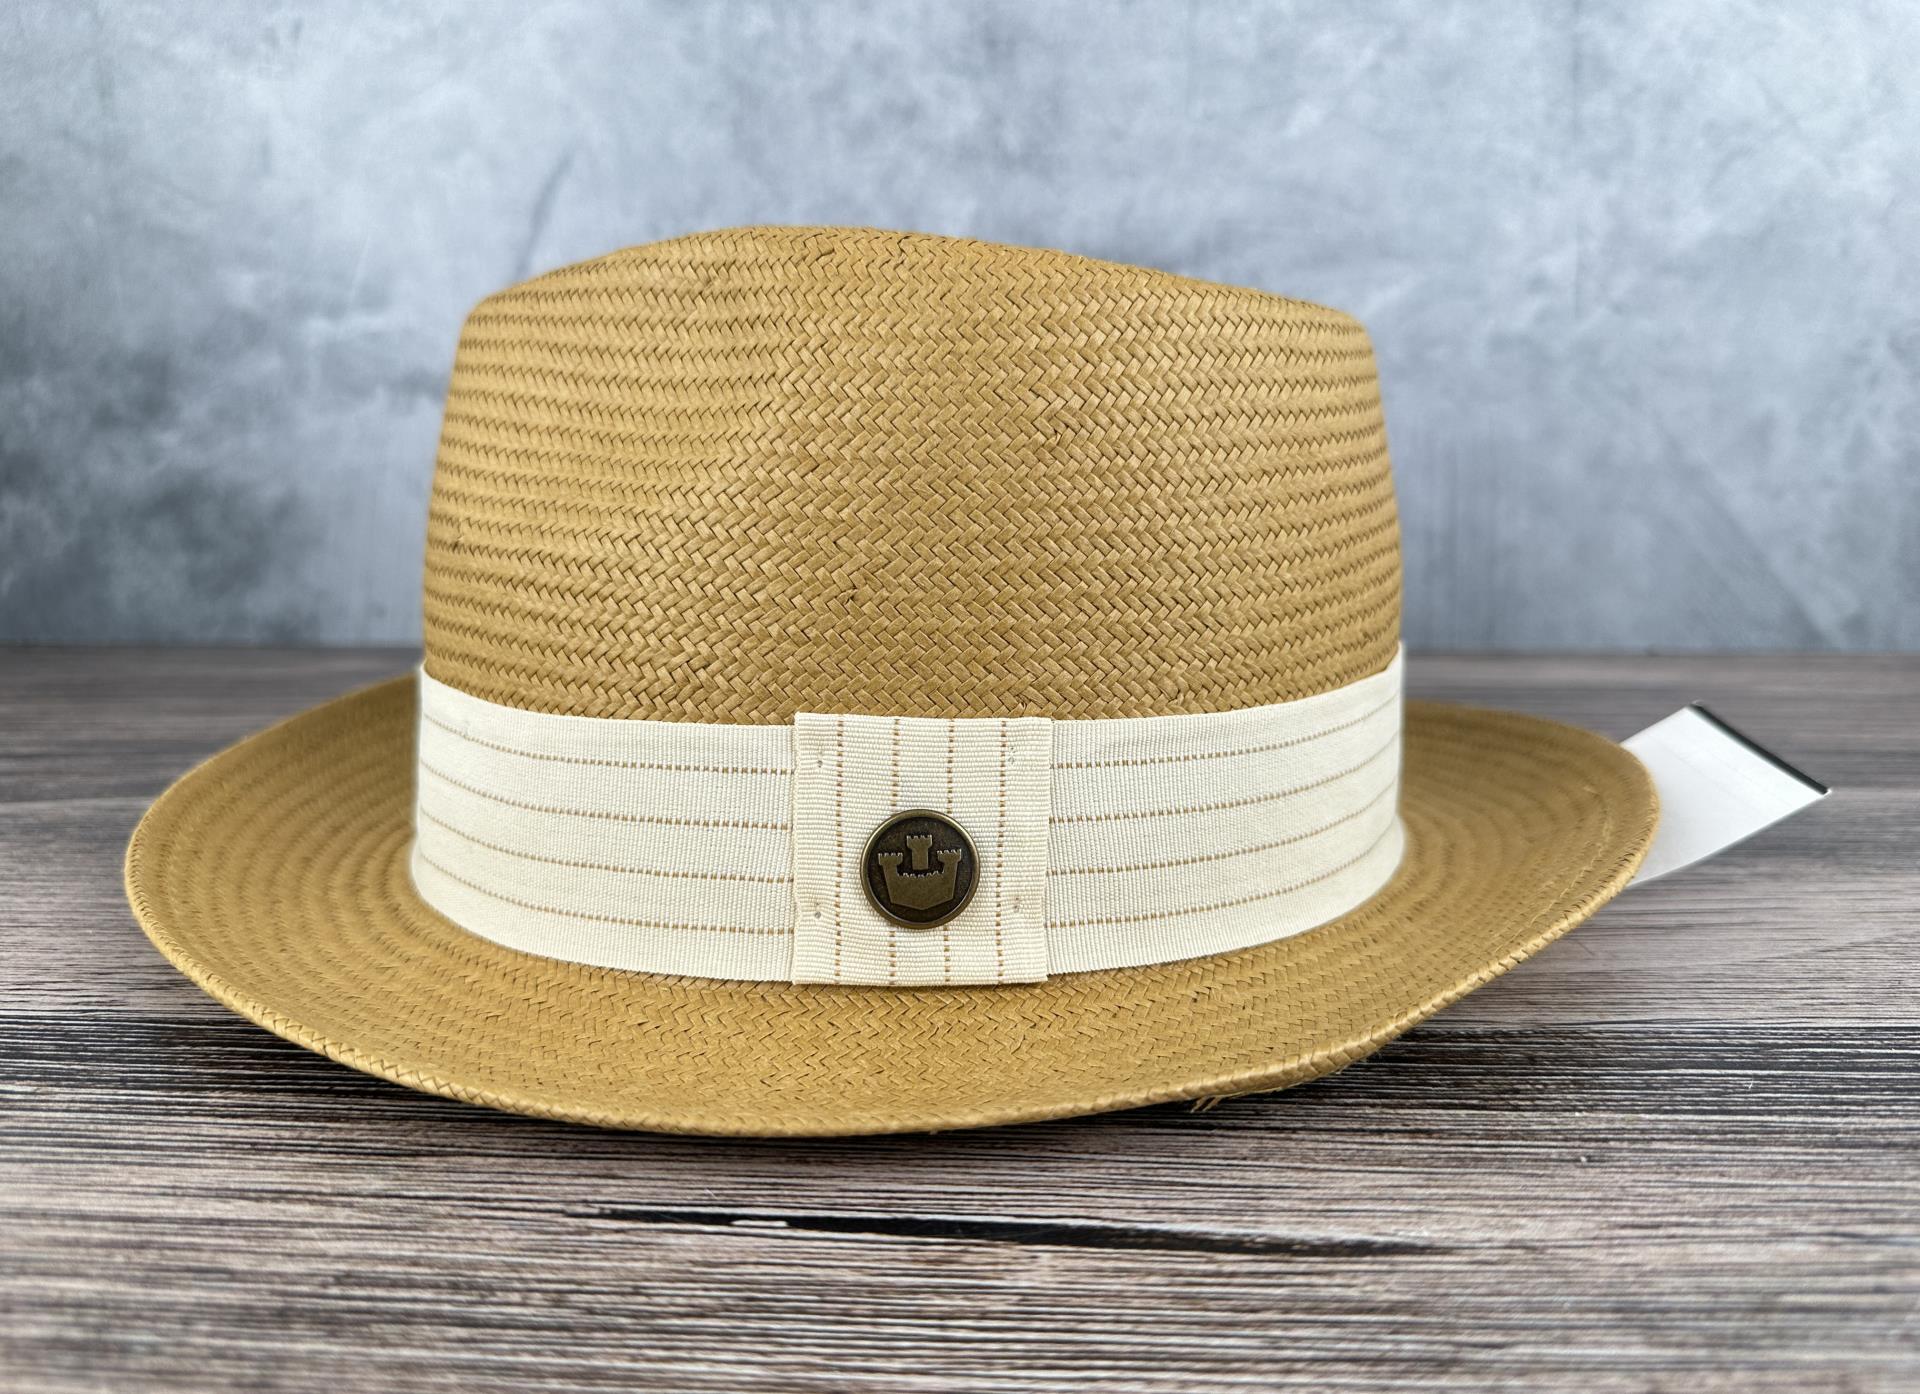 Goorin Bros Straw Panama Fedora Hat